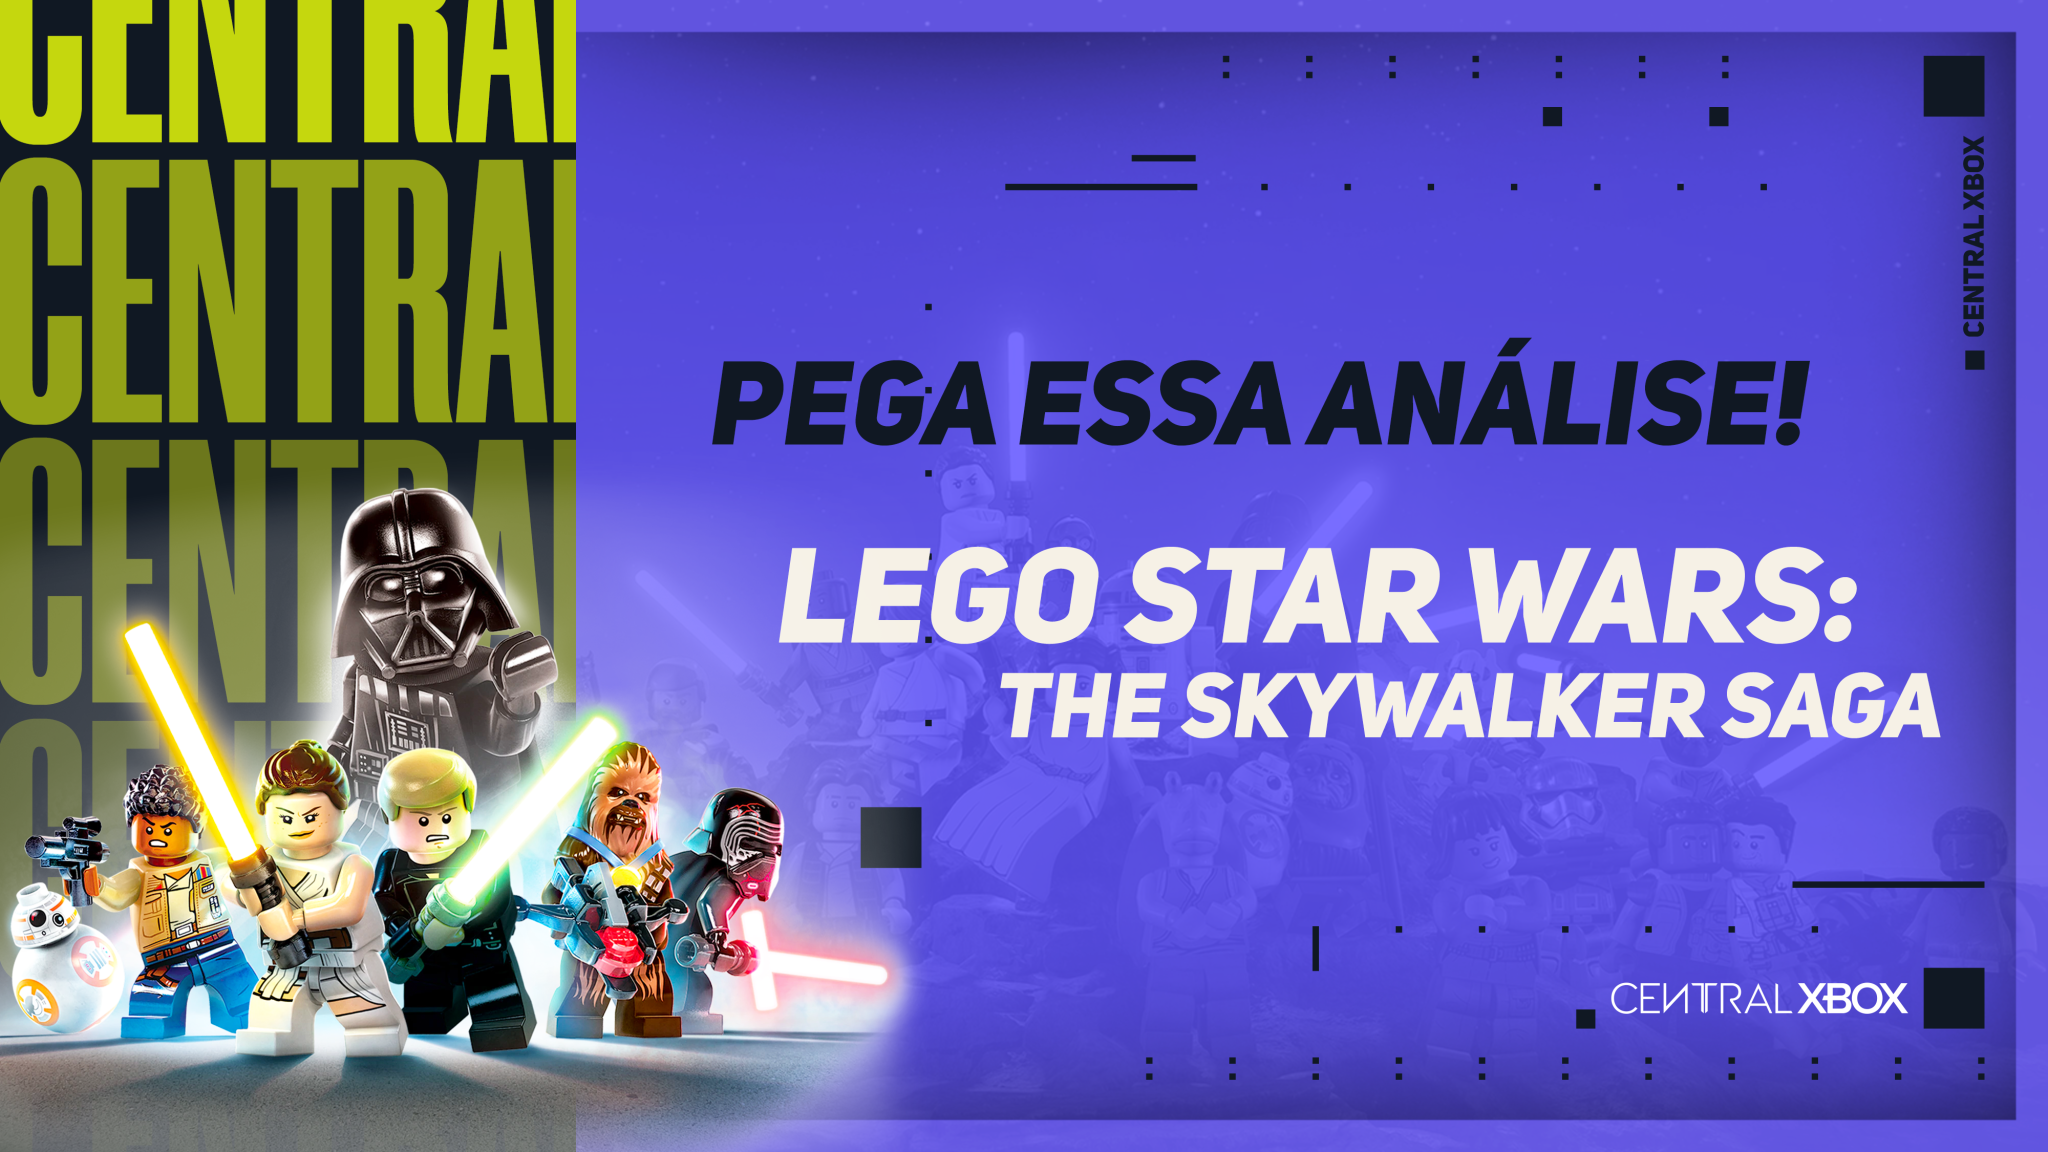 Pega essa Análise! Lego Star Wars: The Skywalker Saga | Central Xbox